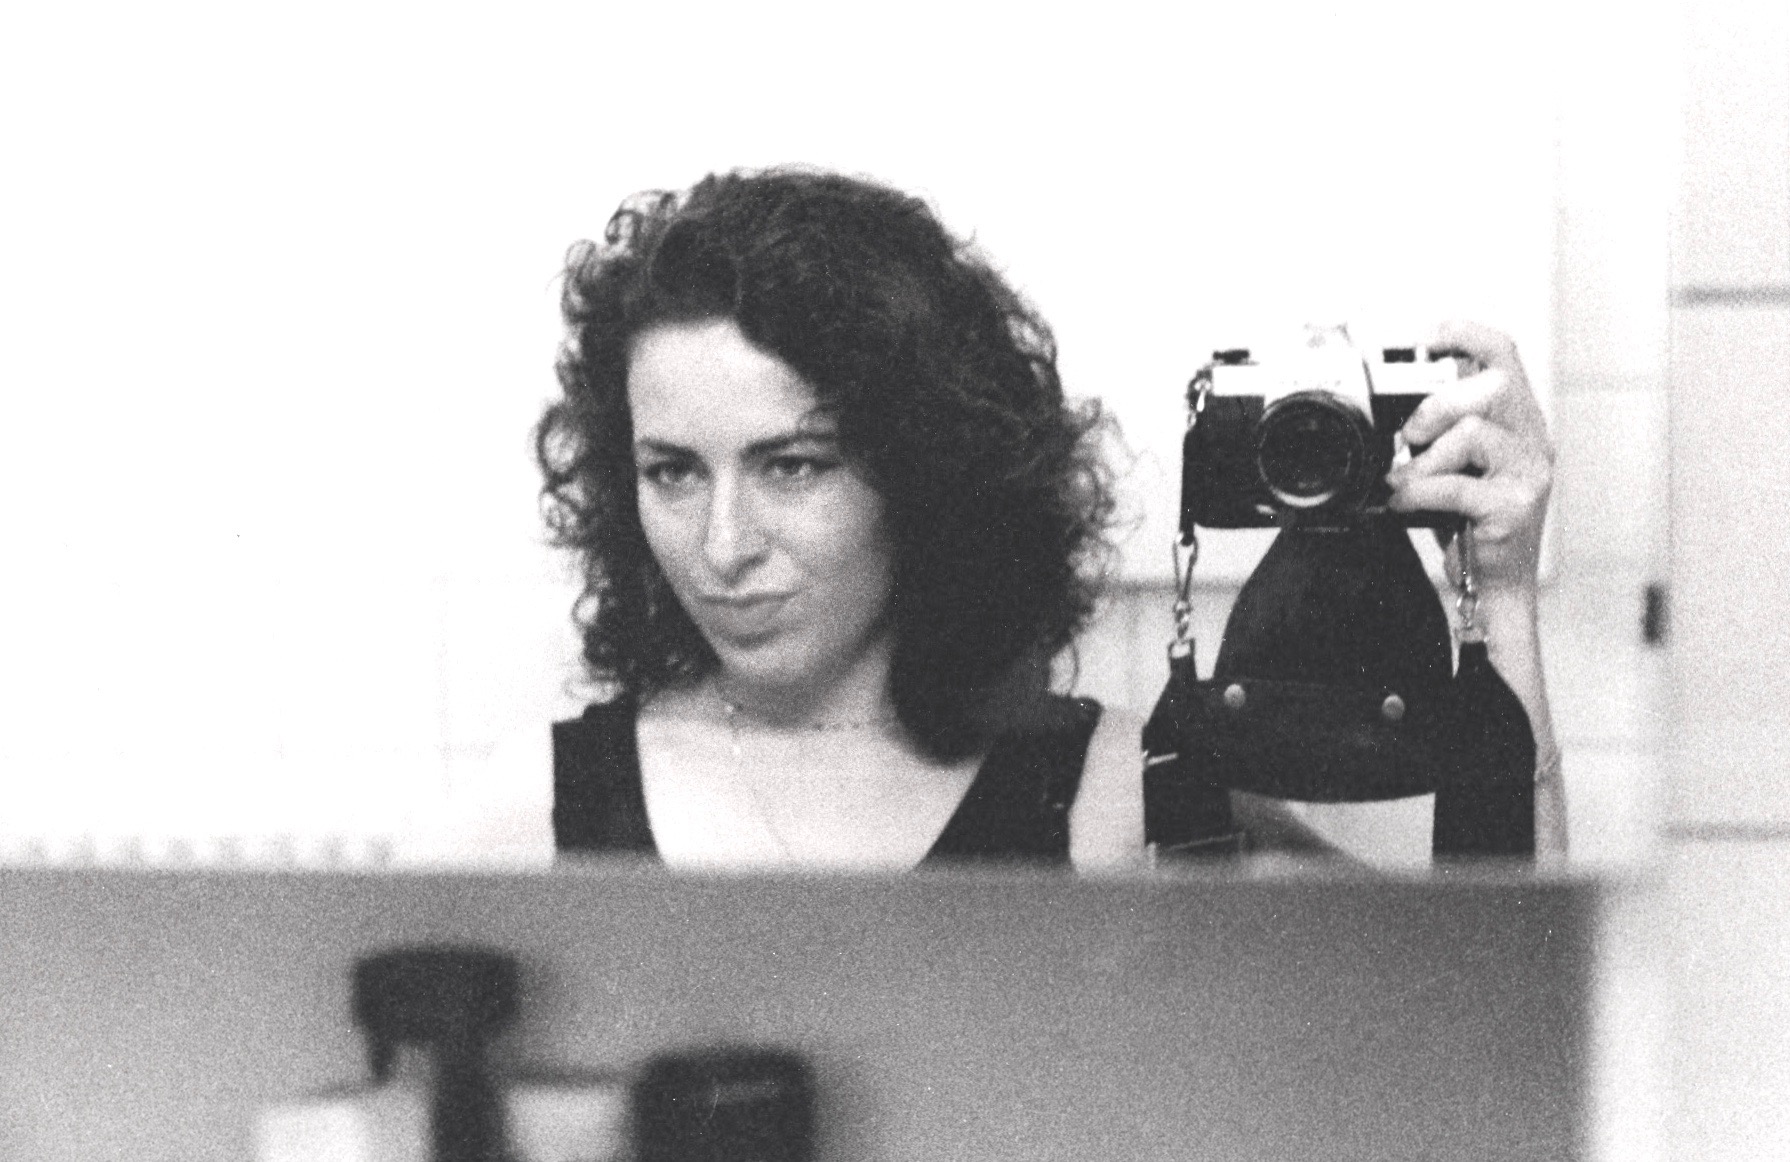 Analog Selfie, Diana Pinck, The Village, NYC in the 80ties